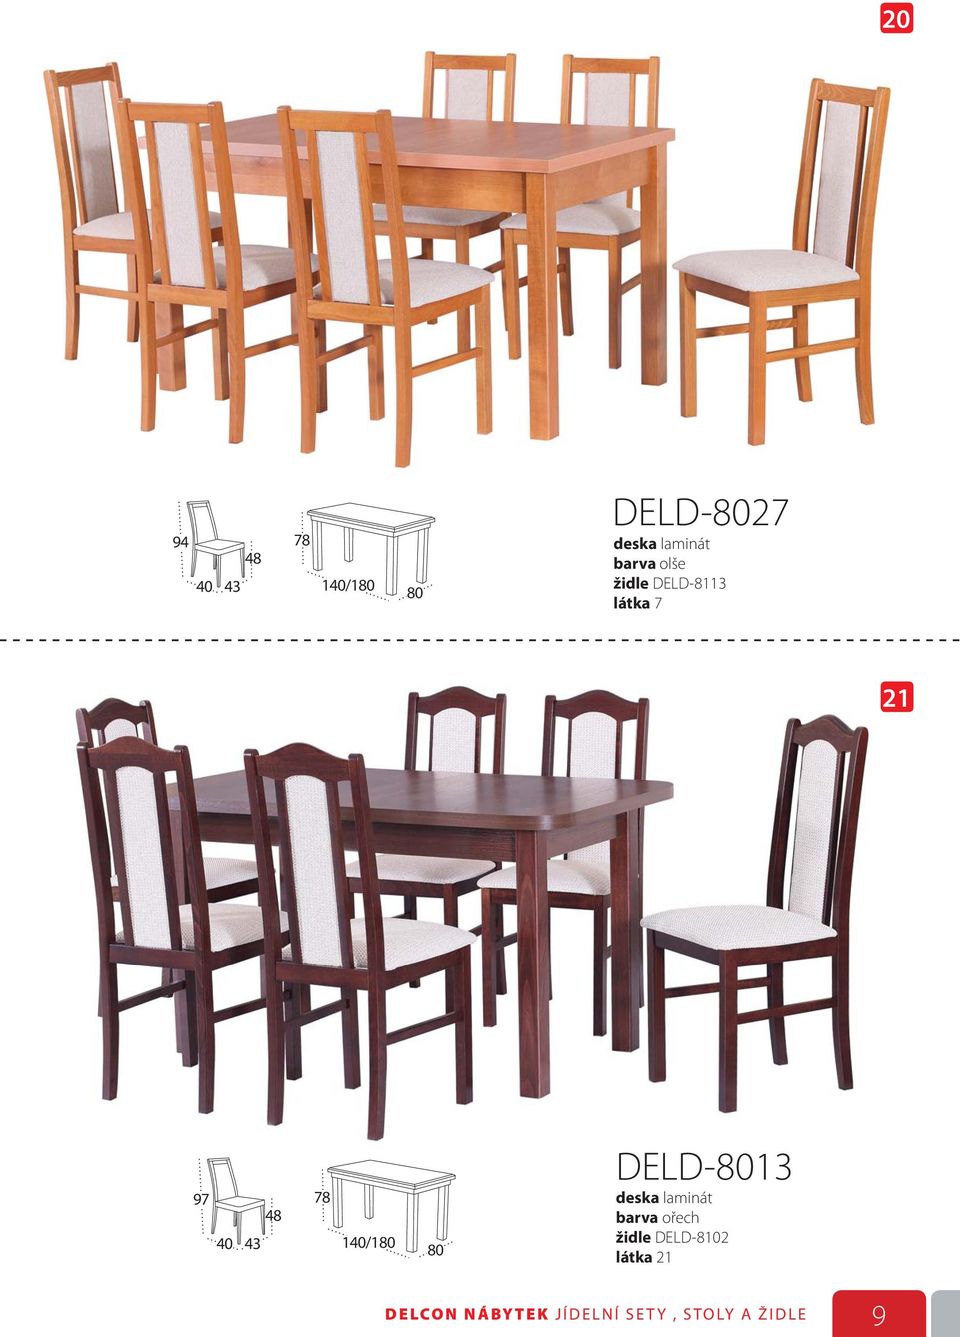 DELD-13 židle DELD-8102 látka 21